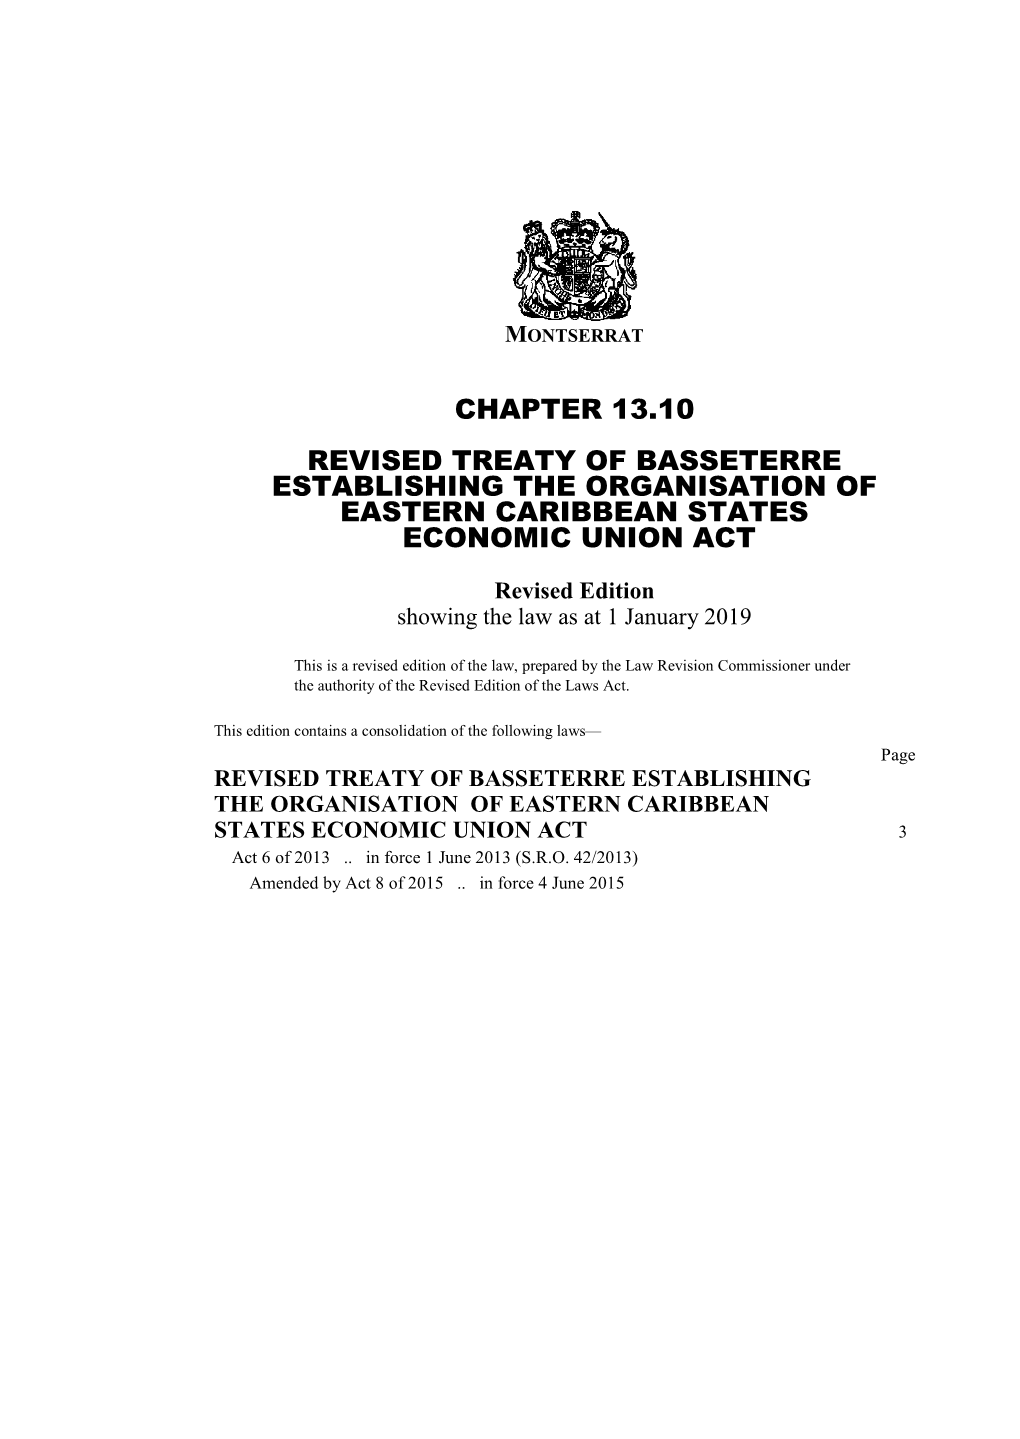 Revised Treaty of Basseterre Establishing the Organisation of Eastern Caribbean States Economic Union Act